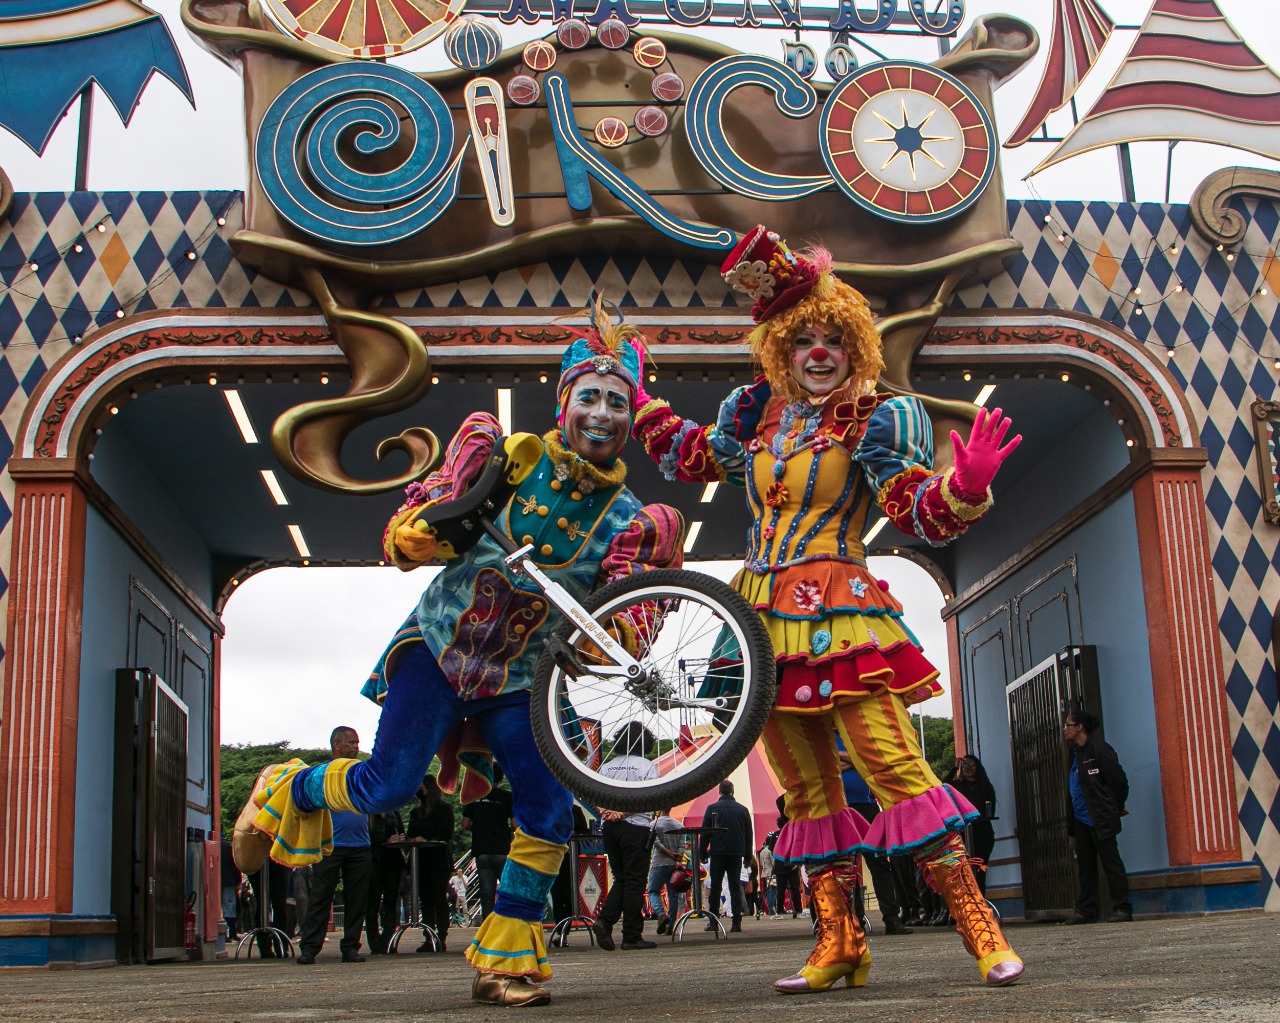 O Mundo do Circo SP: Arte circense gratuita no Parque da Juventude